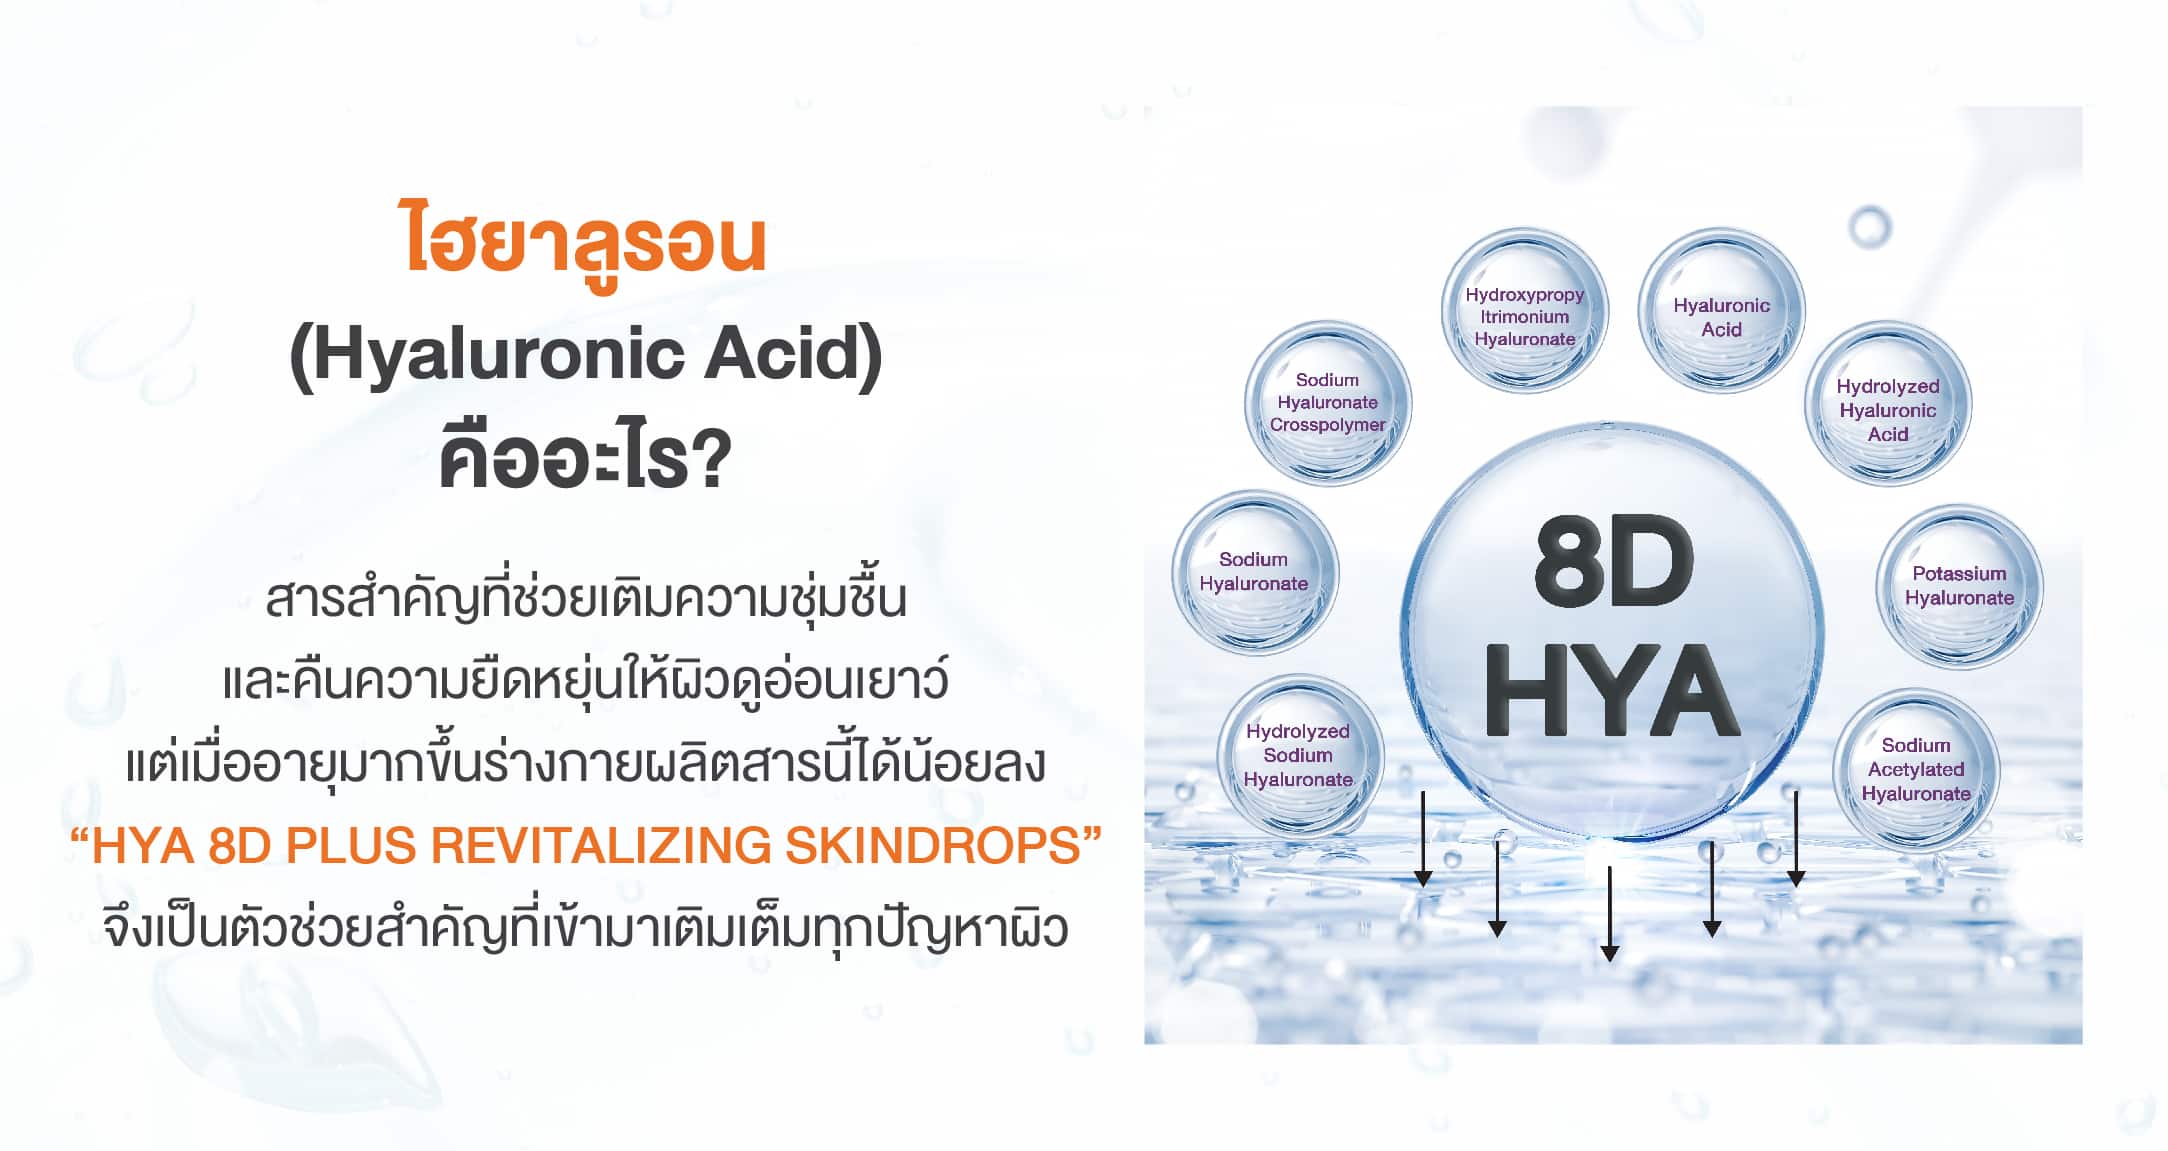 HYA 8D PLUS Revitalizing Skindrops 20 ml. เซรั่มไฮยาลูรอน 8 มิติ ผิวอิ่มฟู ครอบคลุมทุกปัญหาผิว